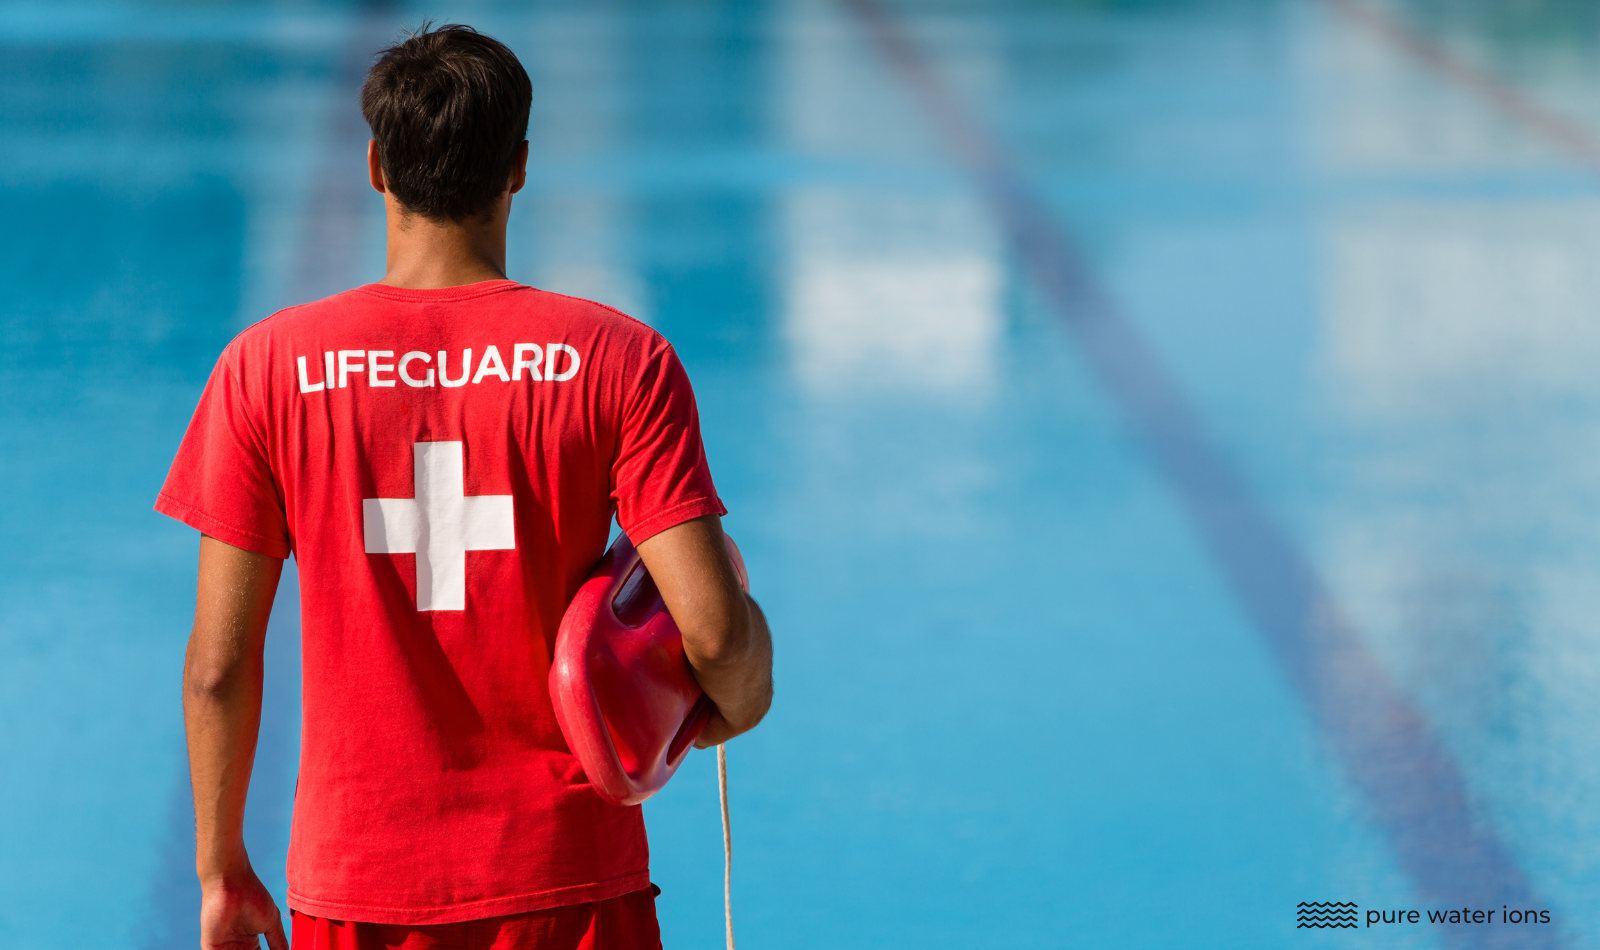 lifeguard standing next to a pool